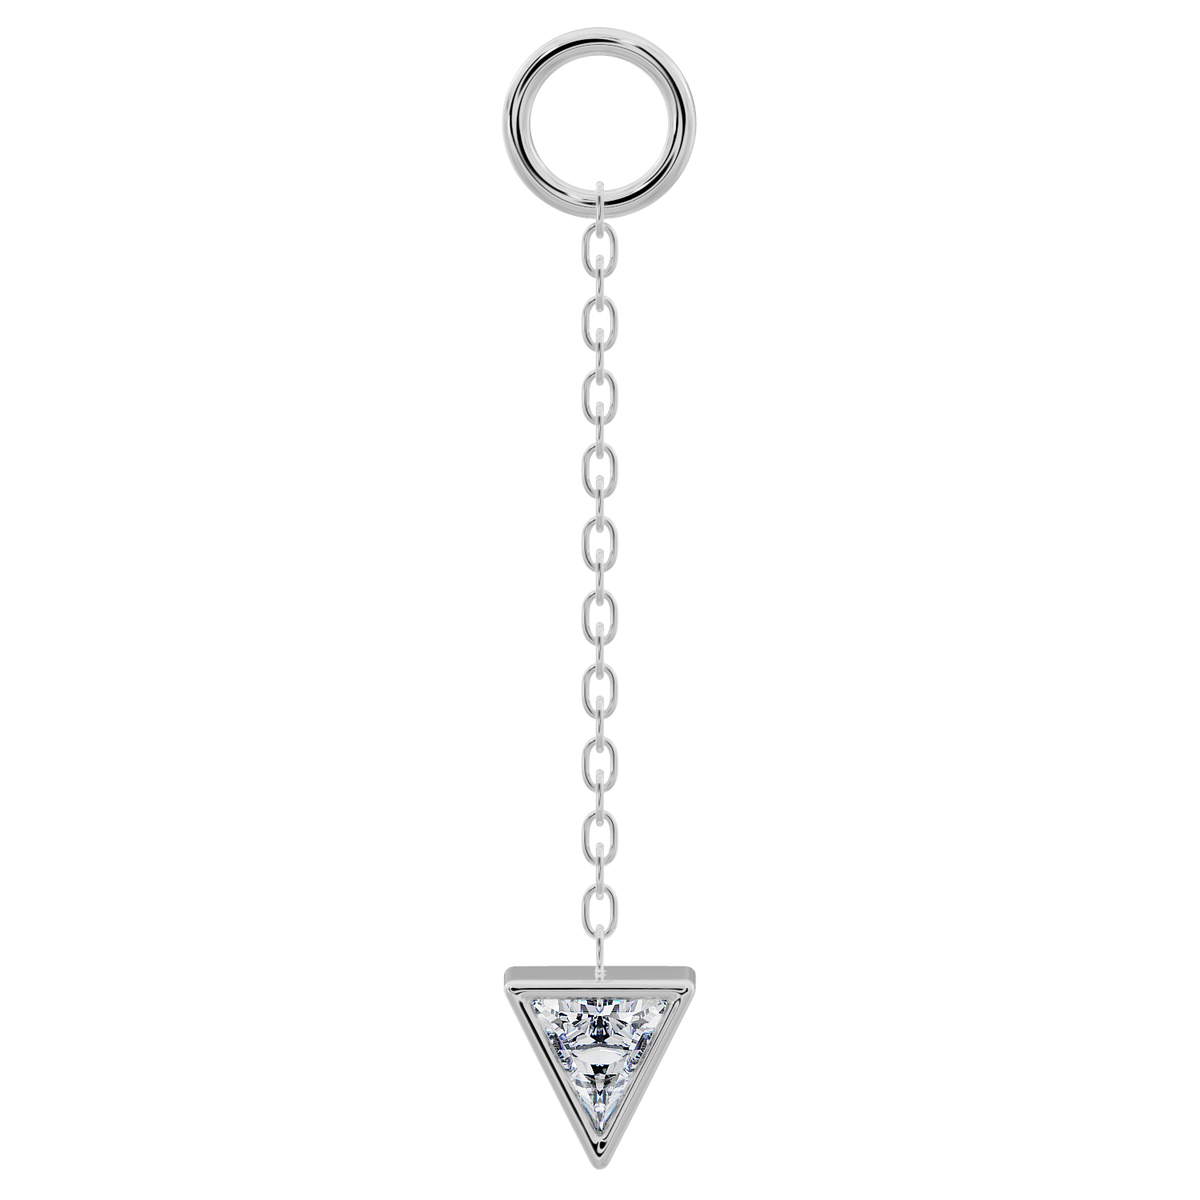 Lot - 14k YG WG Diamond Louis Vuitton Pendant Necklace